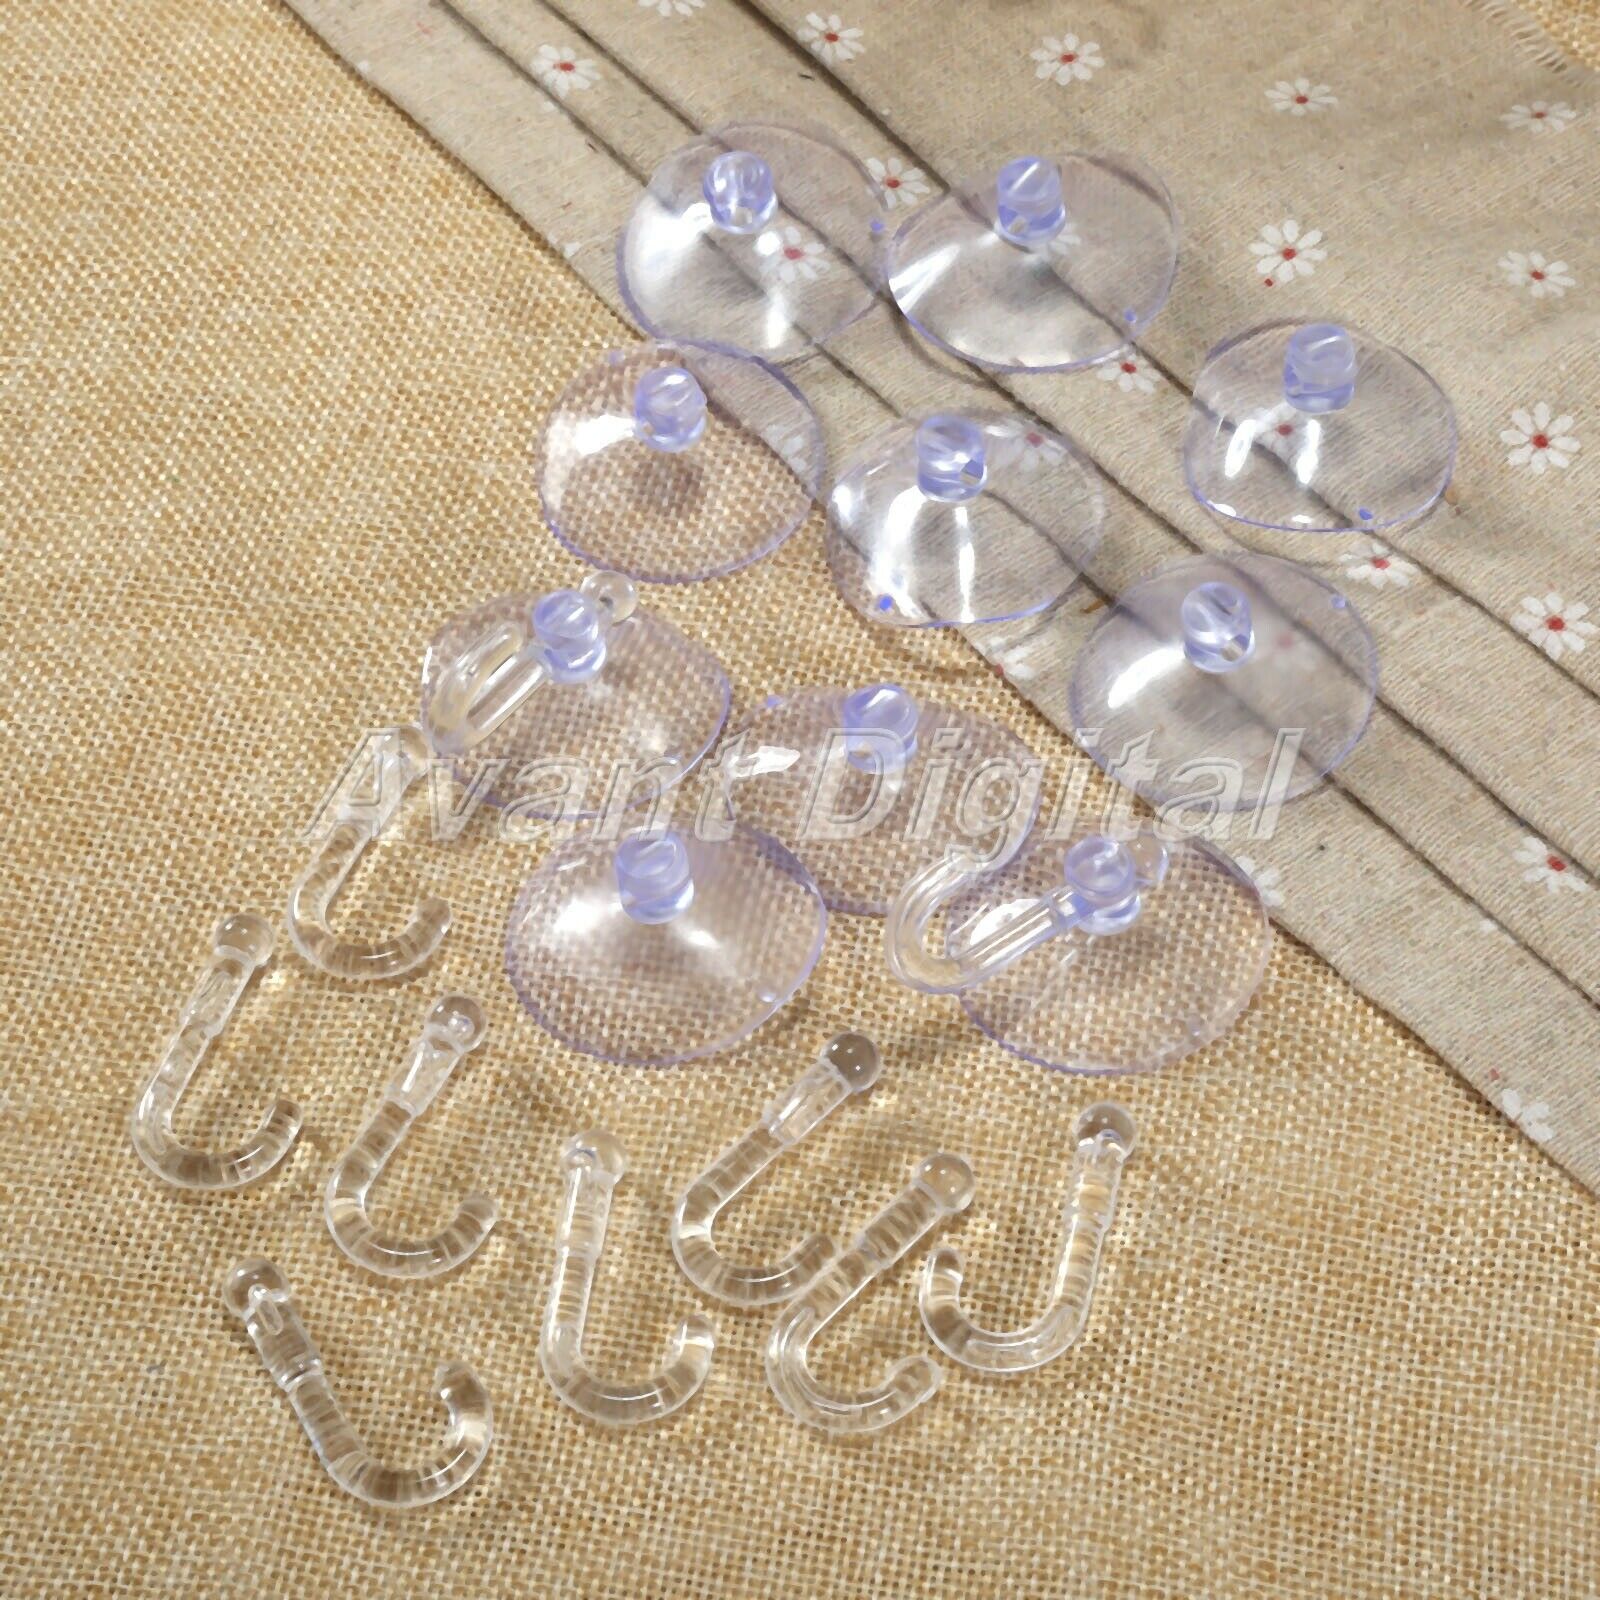 10 x Rubber Suction Cup Hooks Wall Hooks Hanger Kitchen Bathroom 4cm Transparent